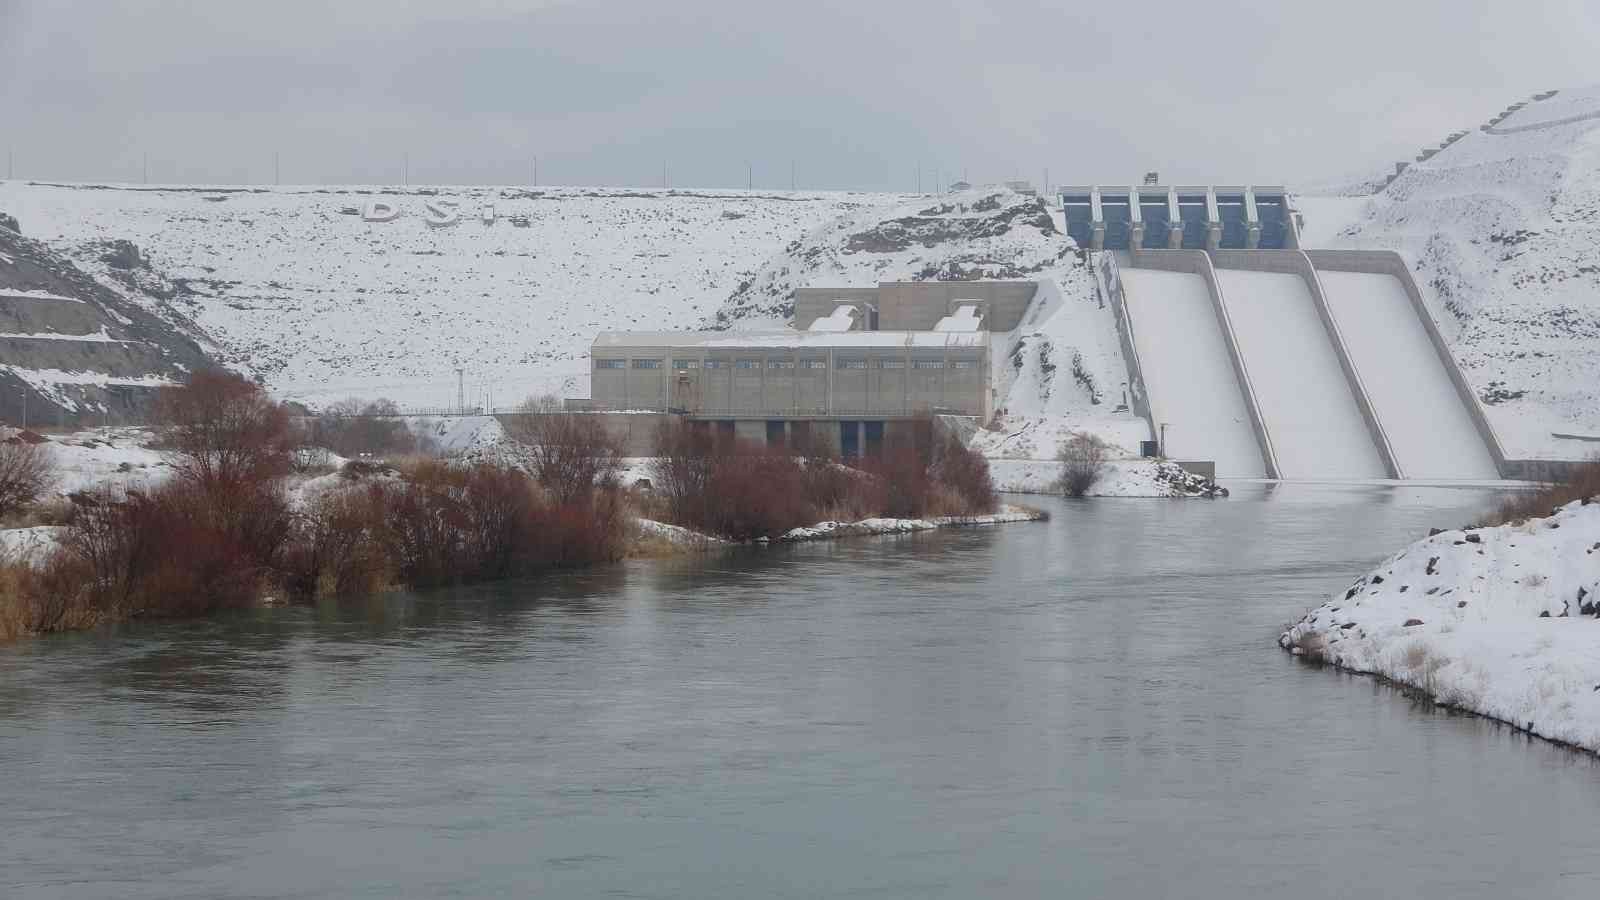 Muş’ta etkili olan kar yağışı barajlara umut oldu #mus